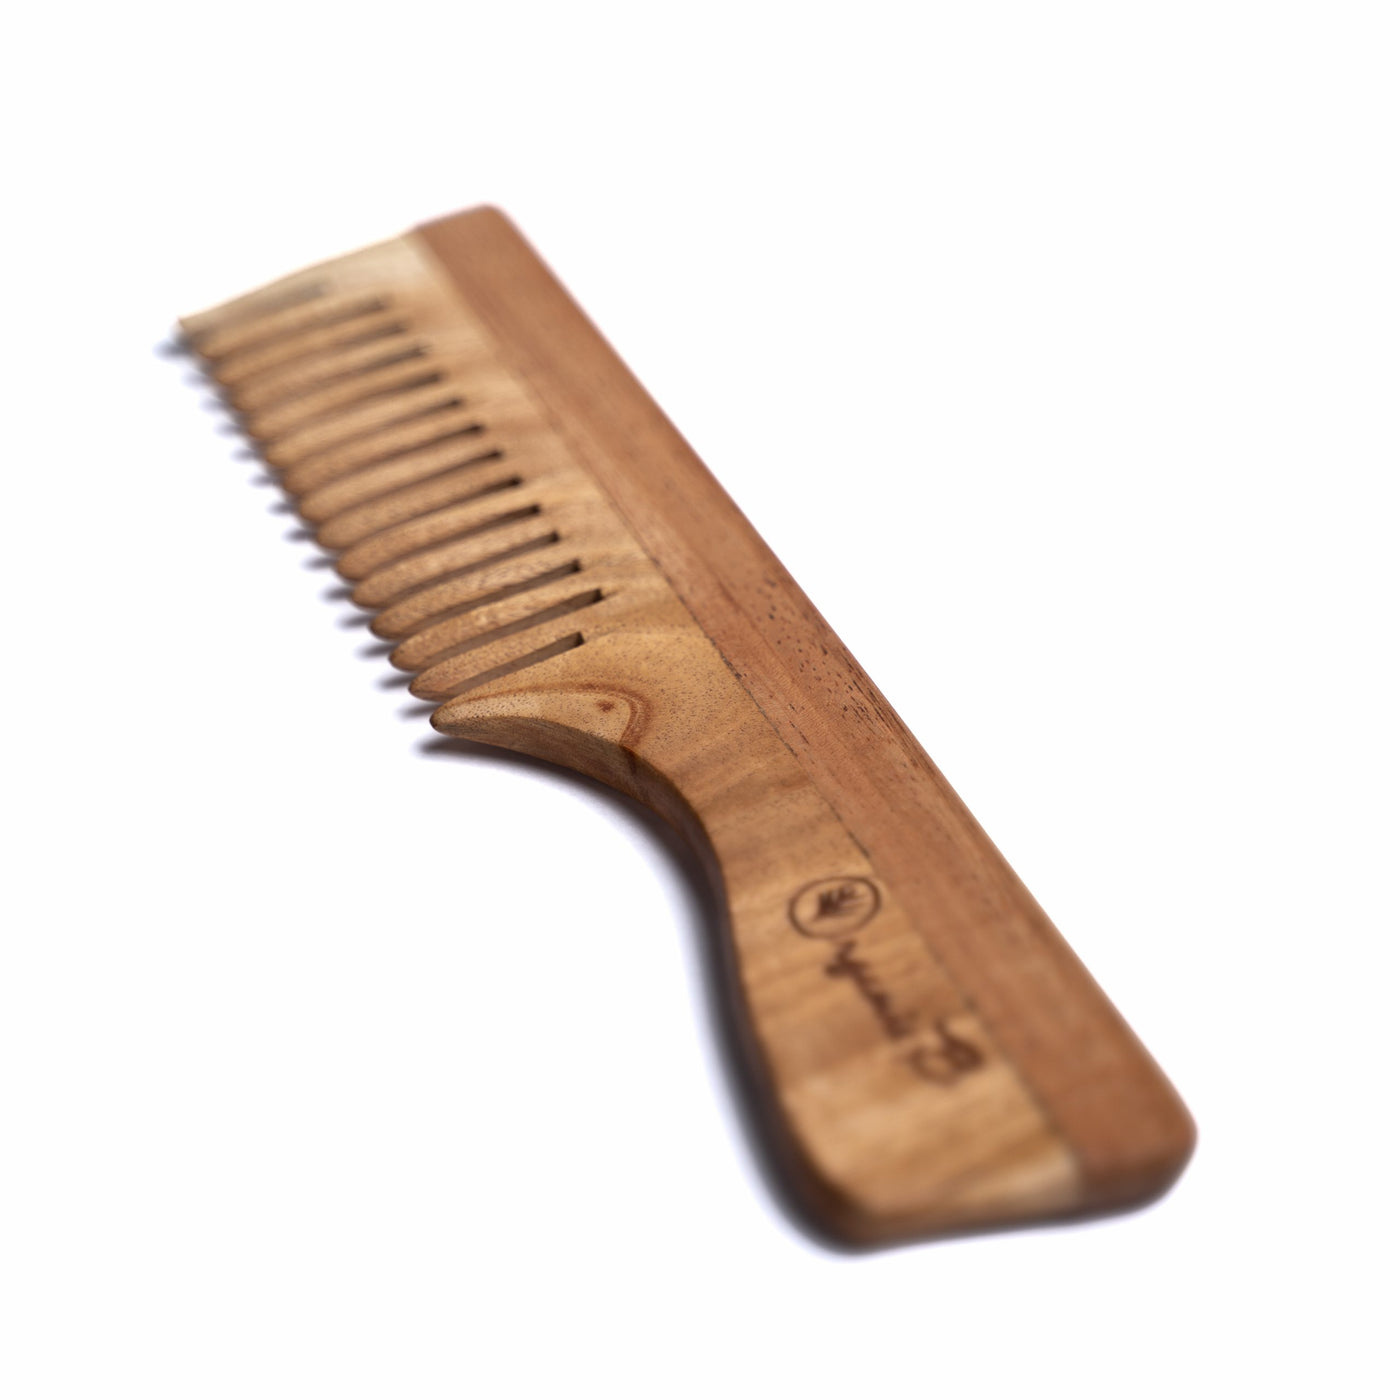 Neem Wood handle Comb for Shampoo and Detangling